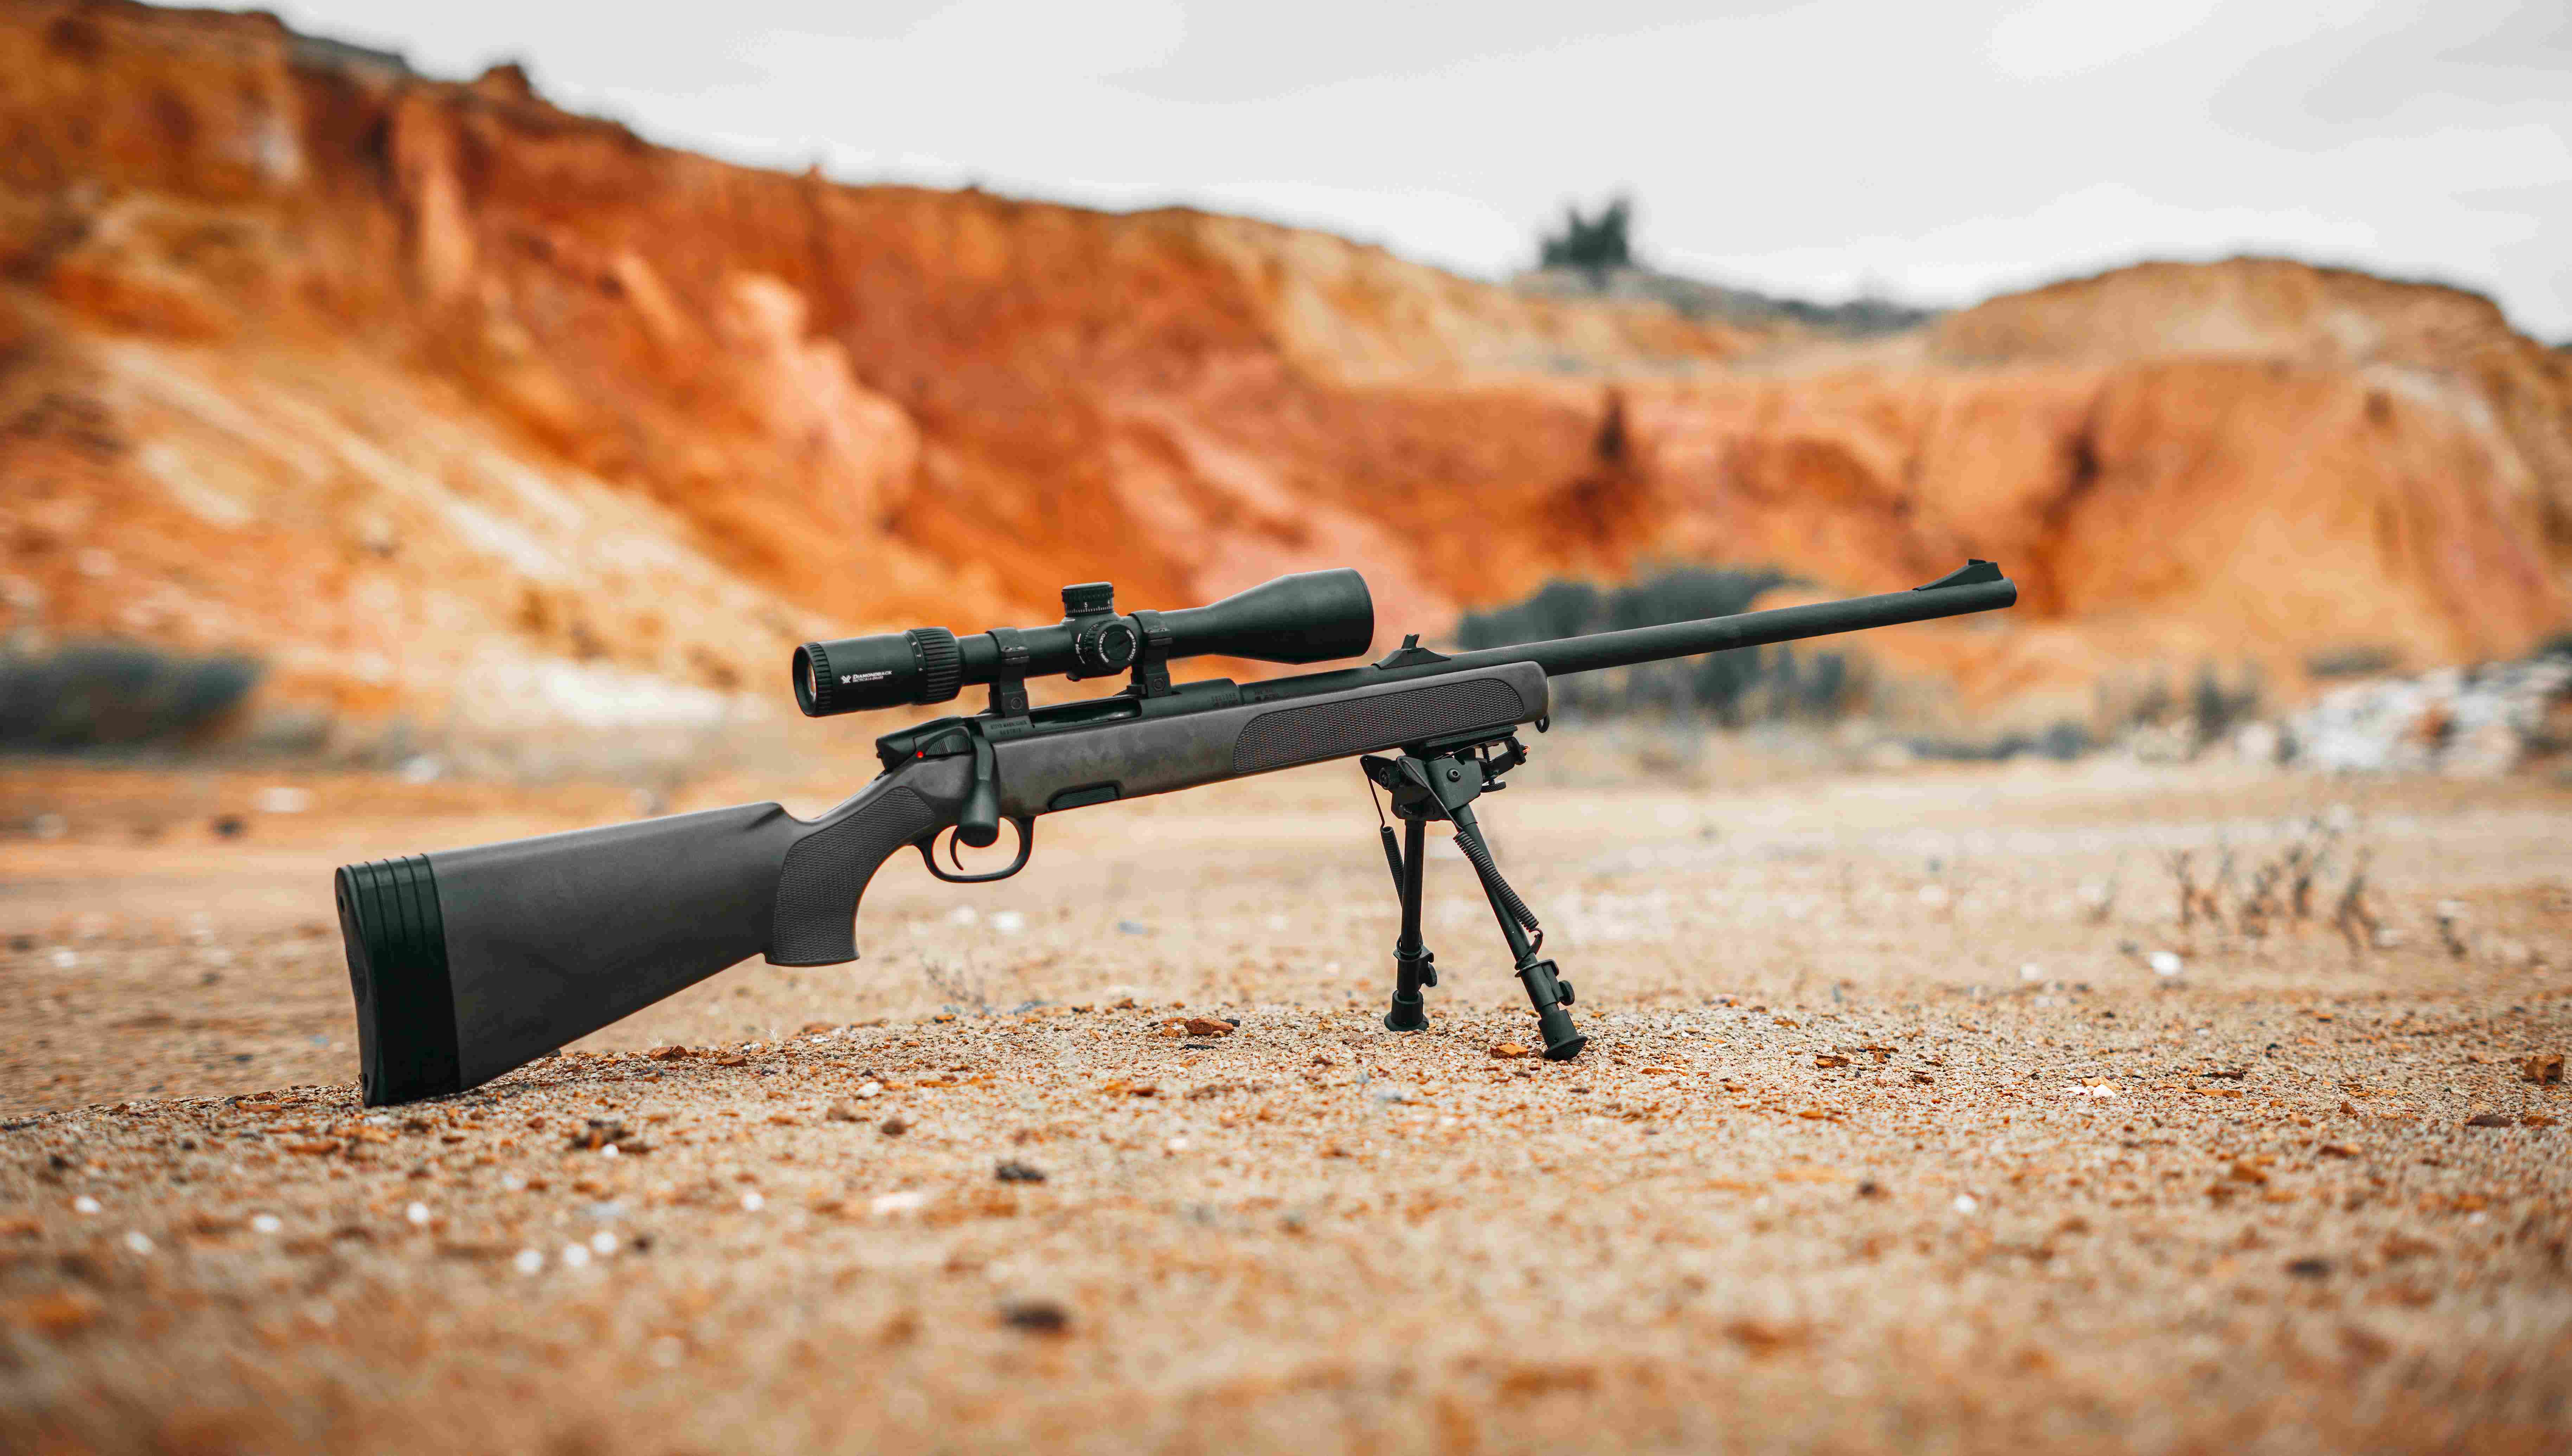 Hunting rifle with tripod